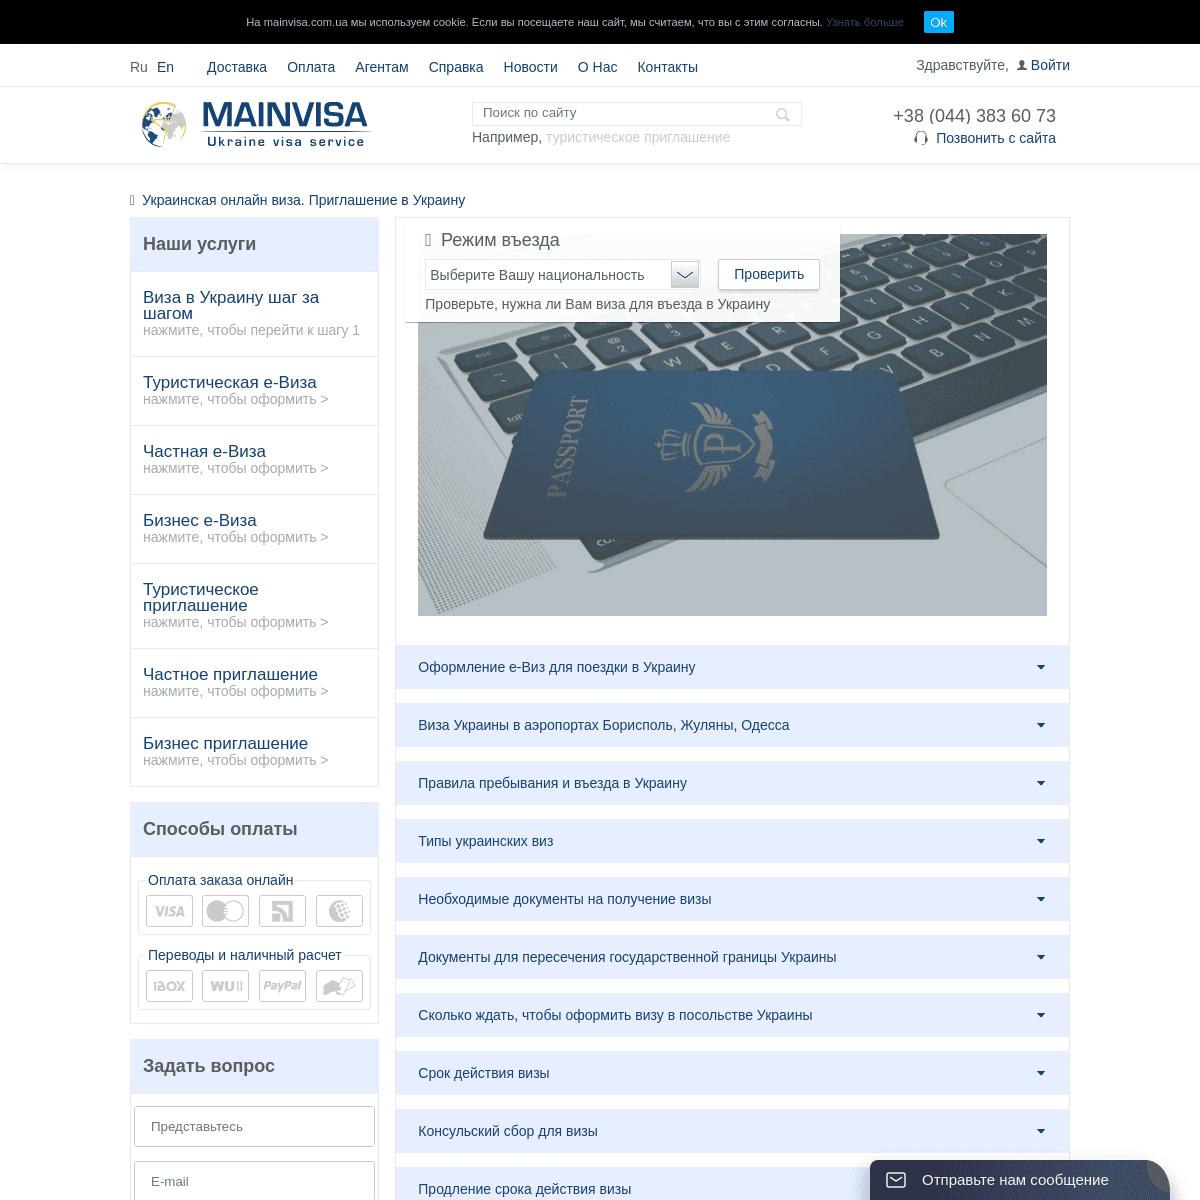 A complete backup of mainvisa.com.ua